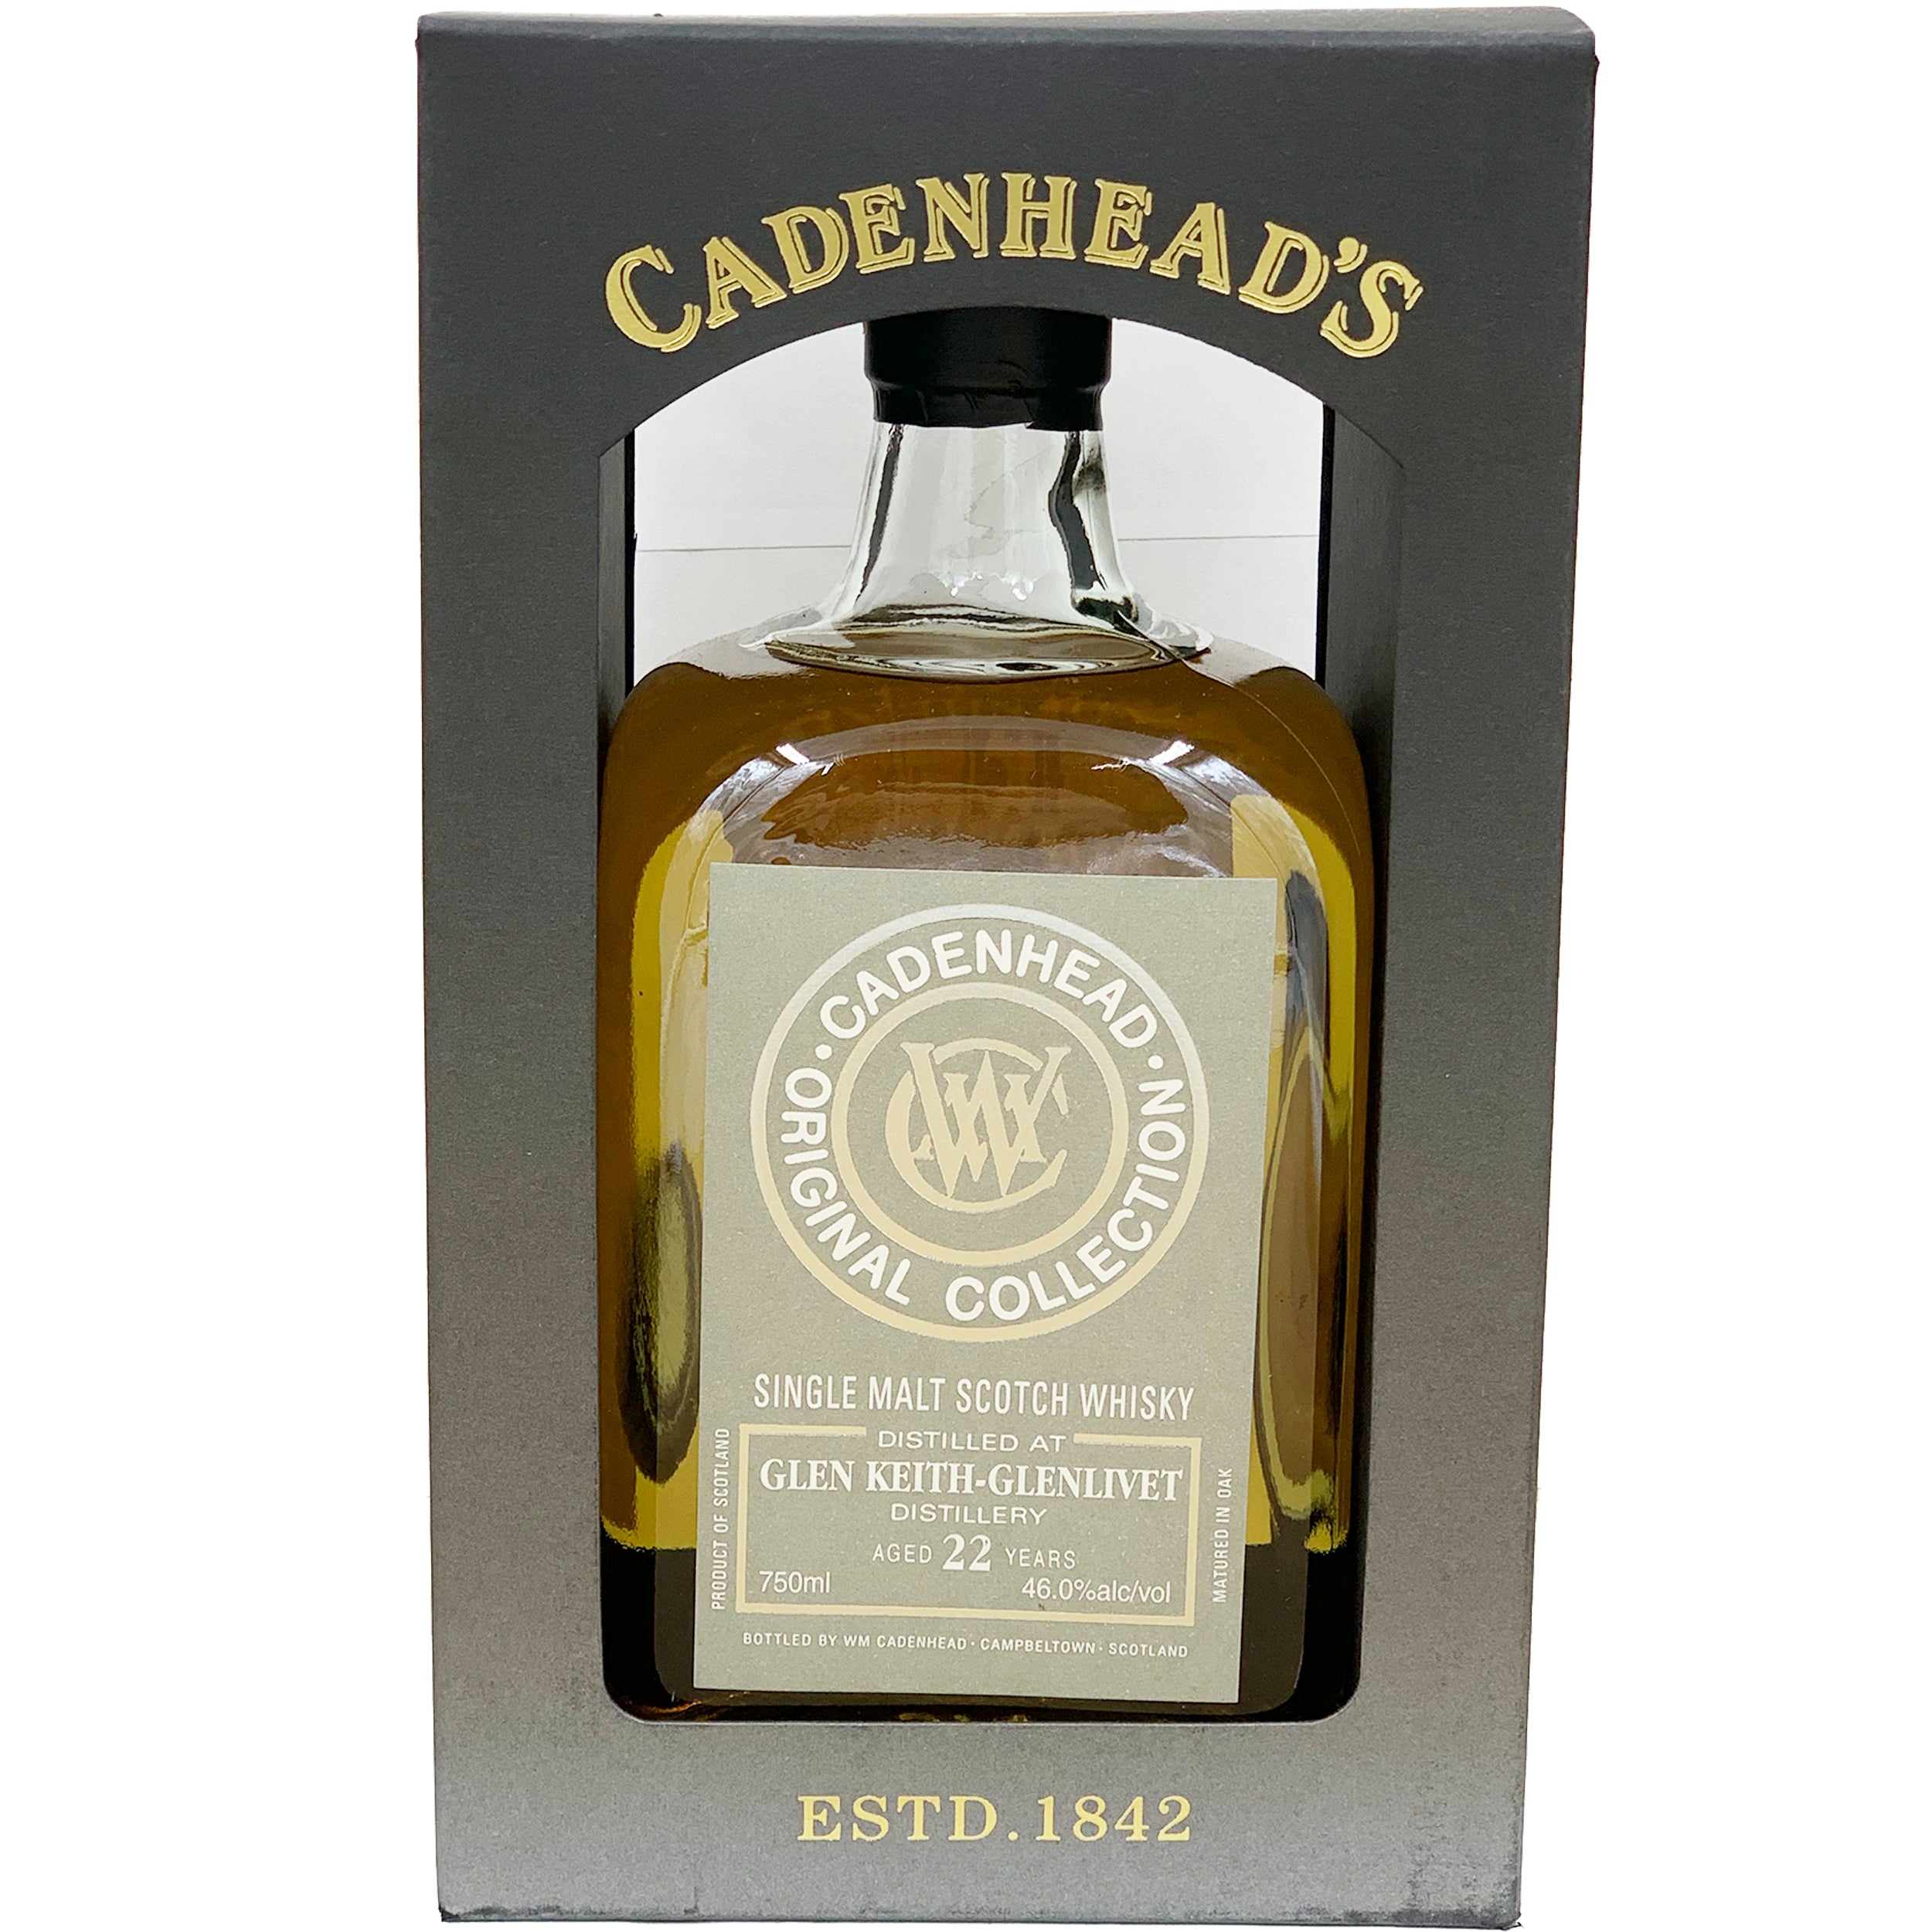 Cadenheads 22 Year Scotch Whisky Glen Keith-Glenlivet